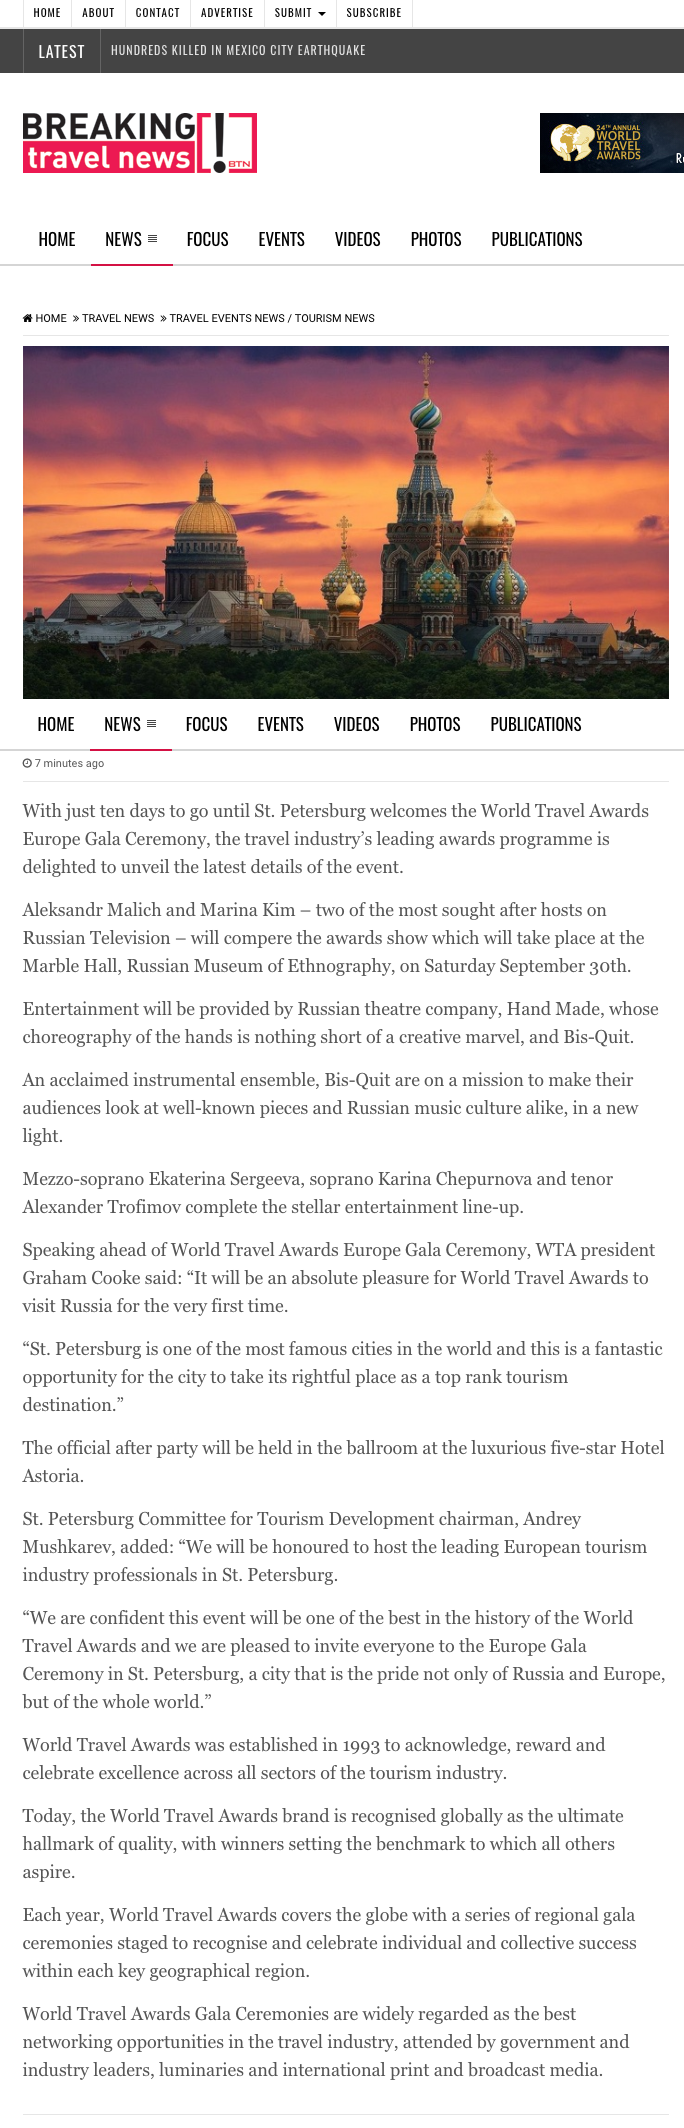 St. Petersburg prepares for World Travel Awards Europe Gala Ceremony